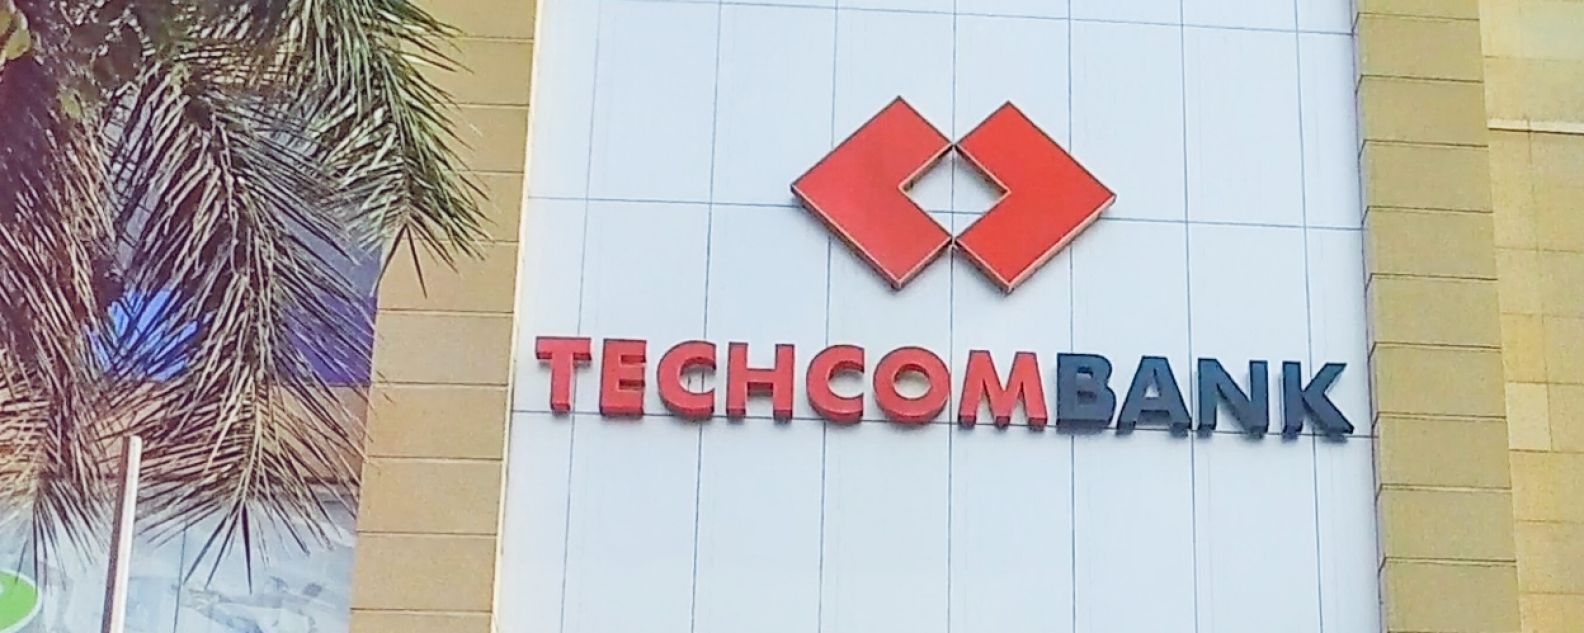 Exterior do edifício Techcombank